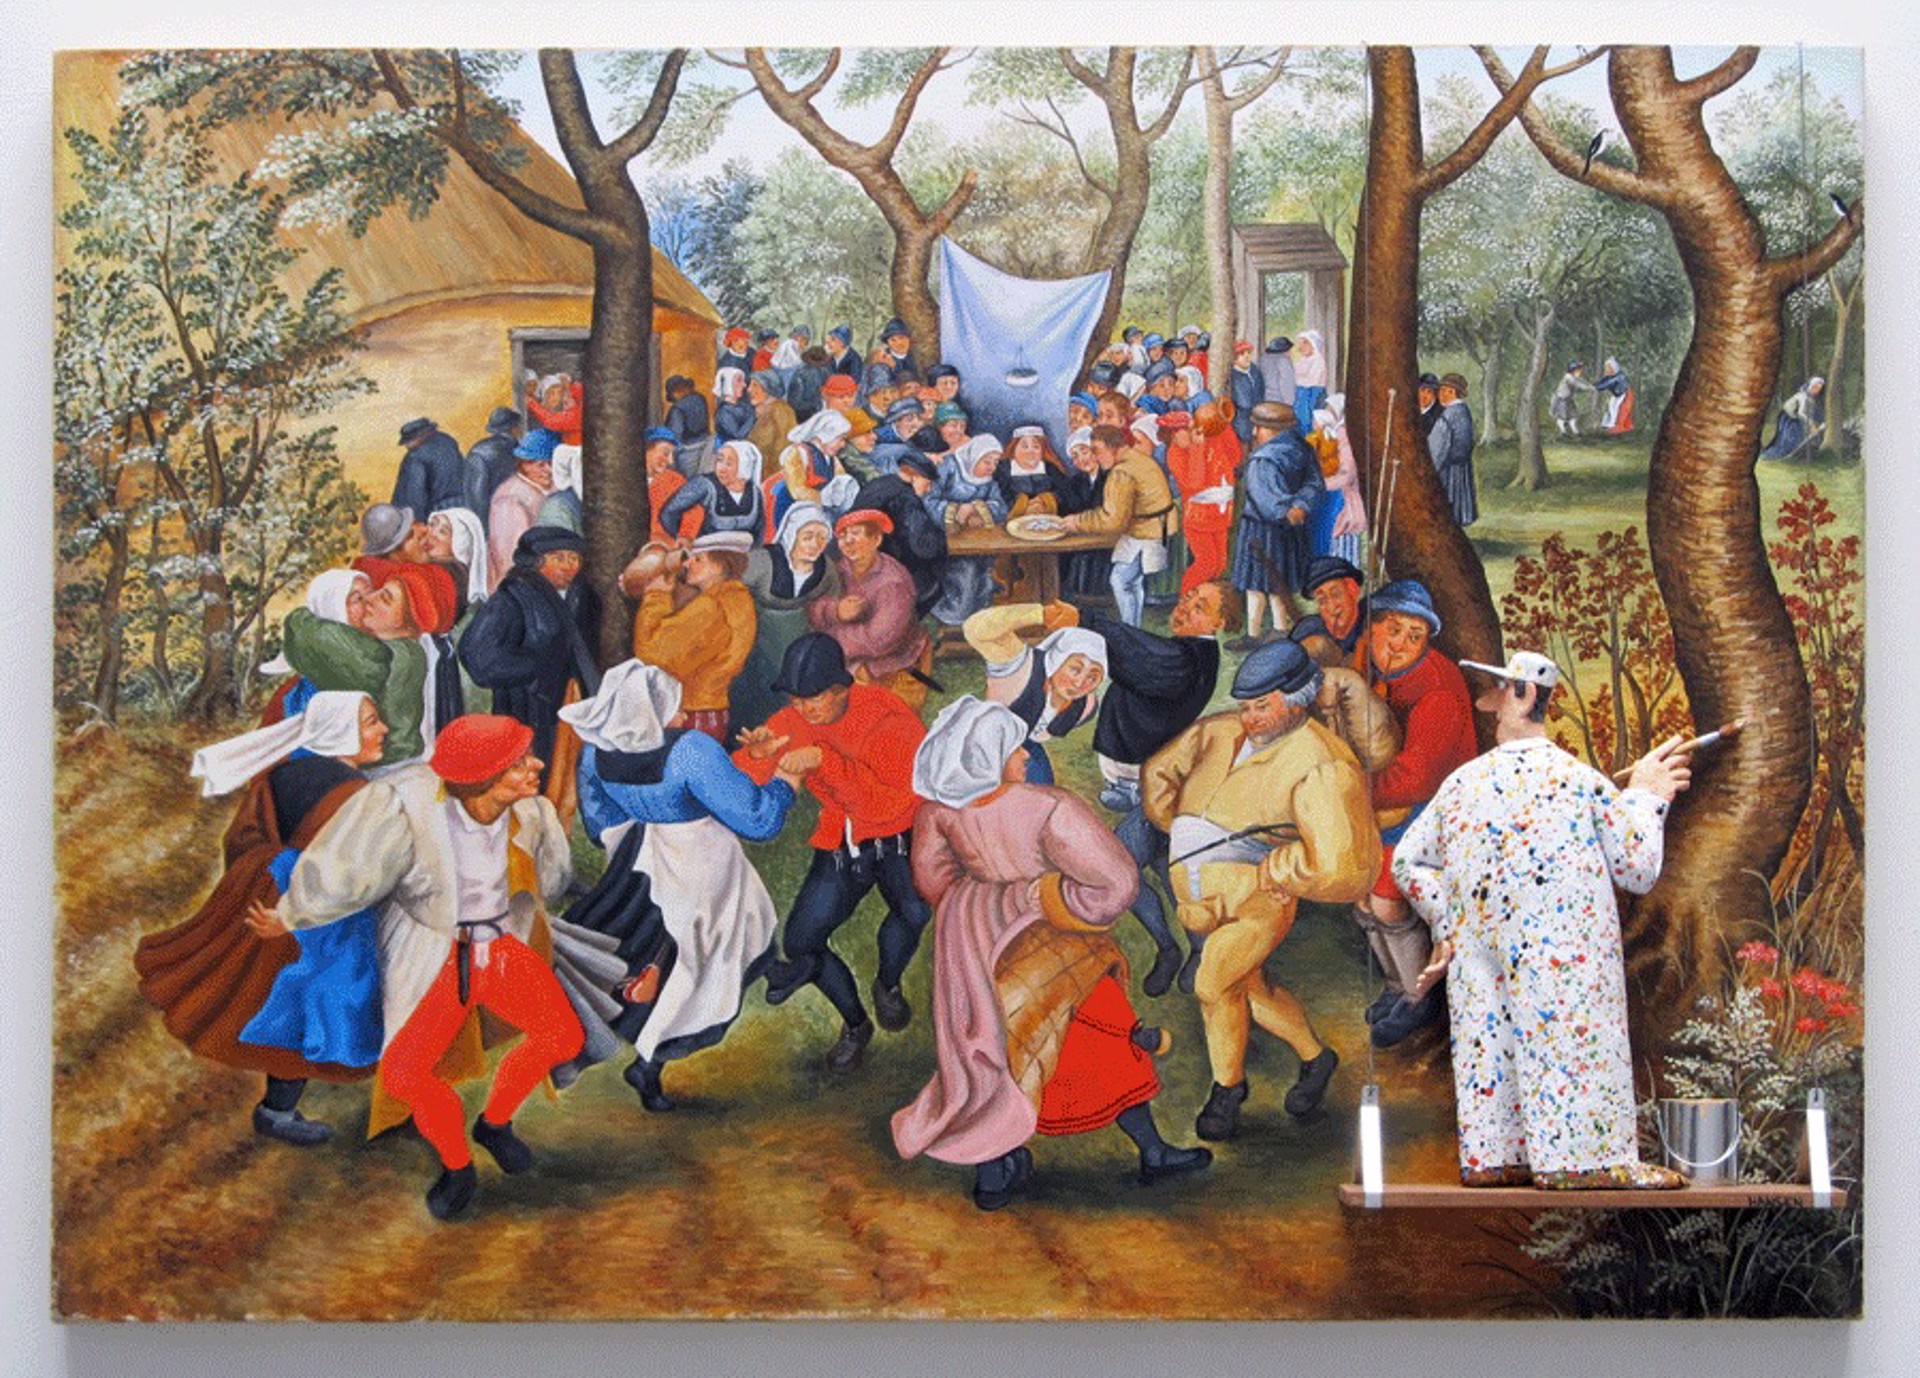 Stephen Hansen's tribute to Peter Brueghel II's 1607 painting, Peasant Wedding Dance